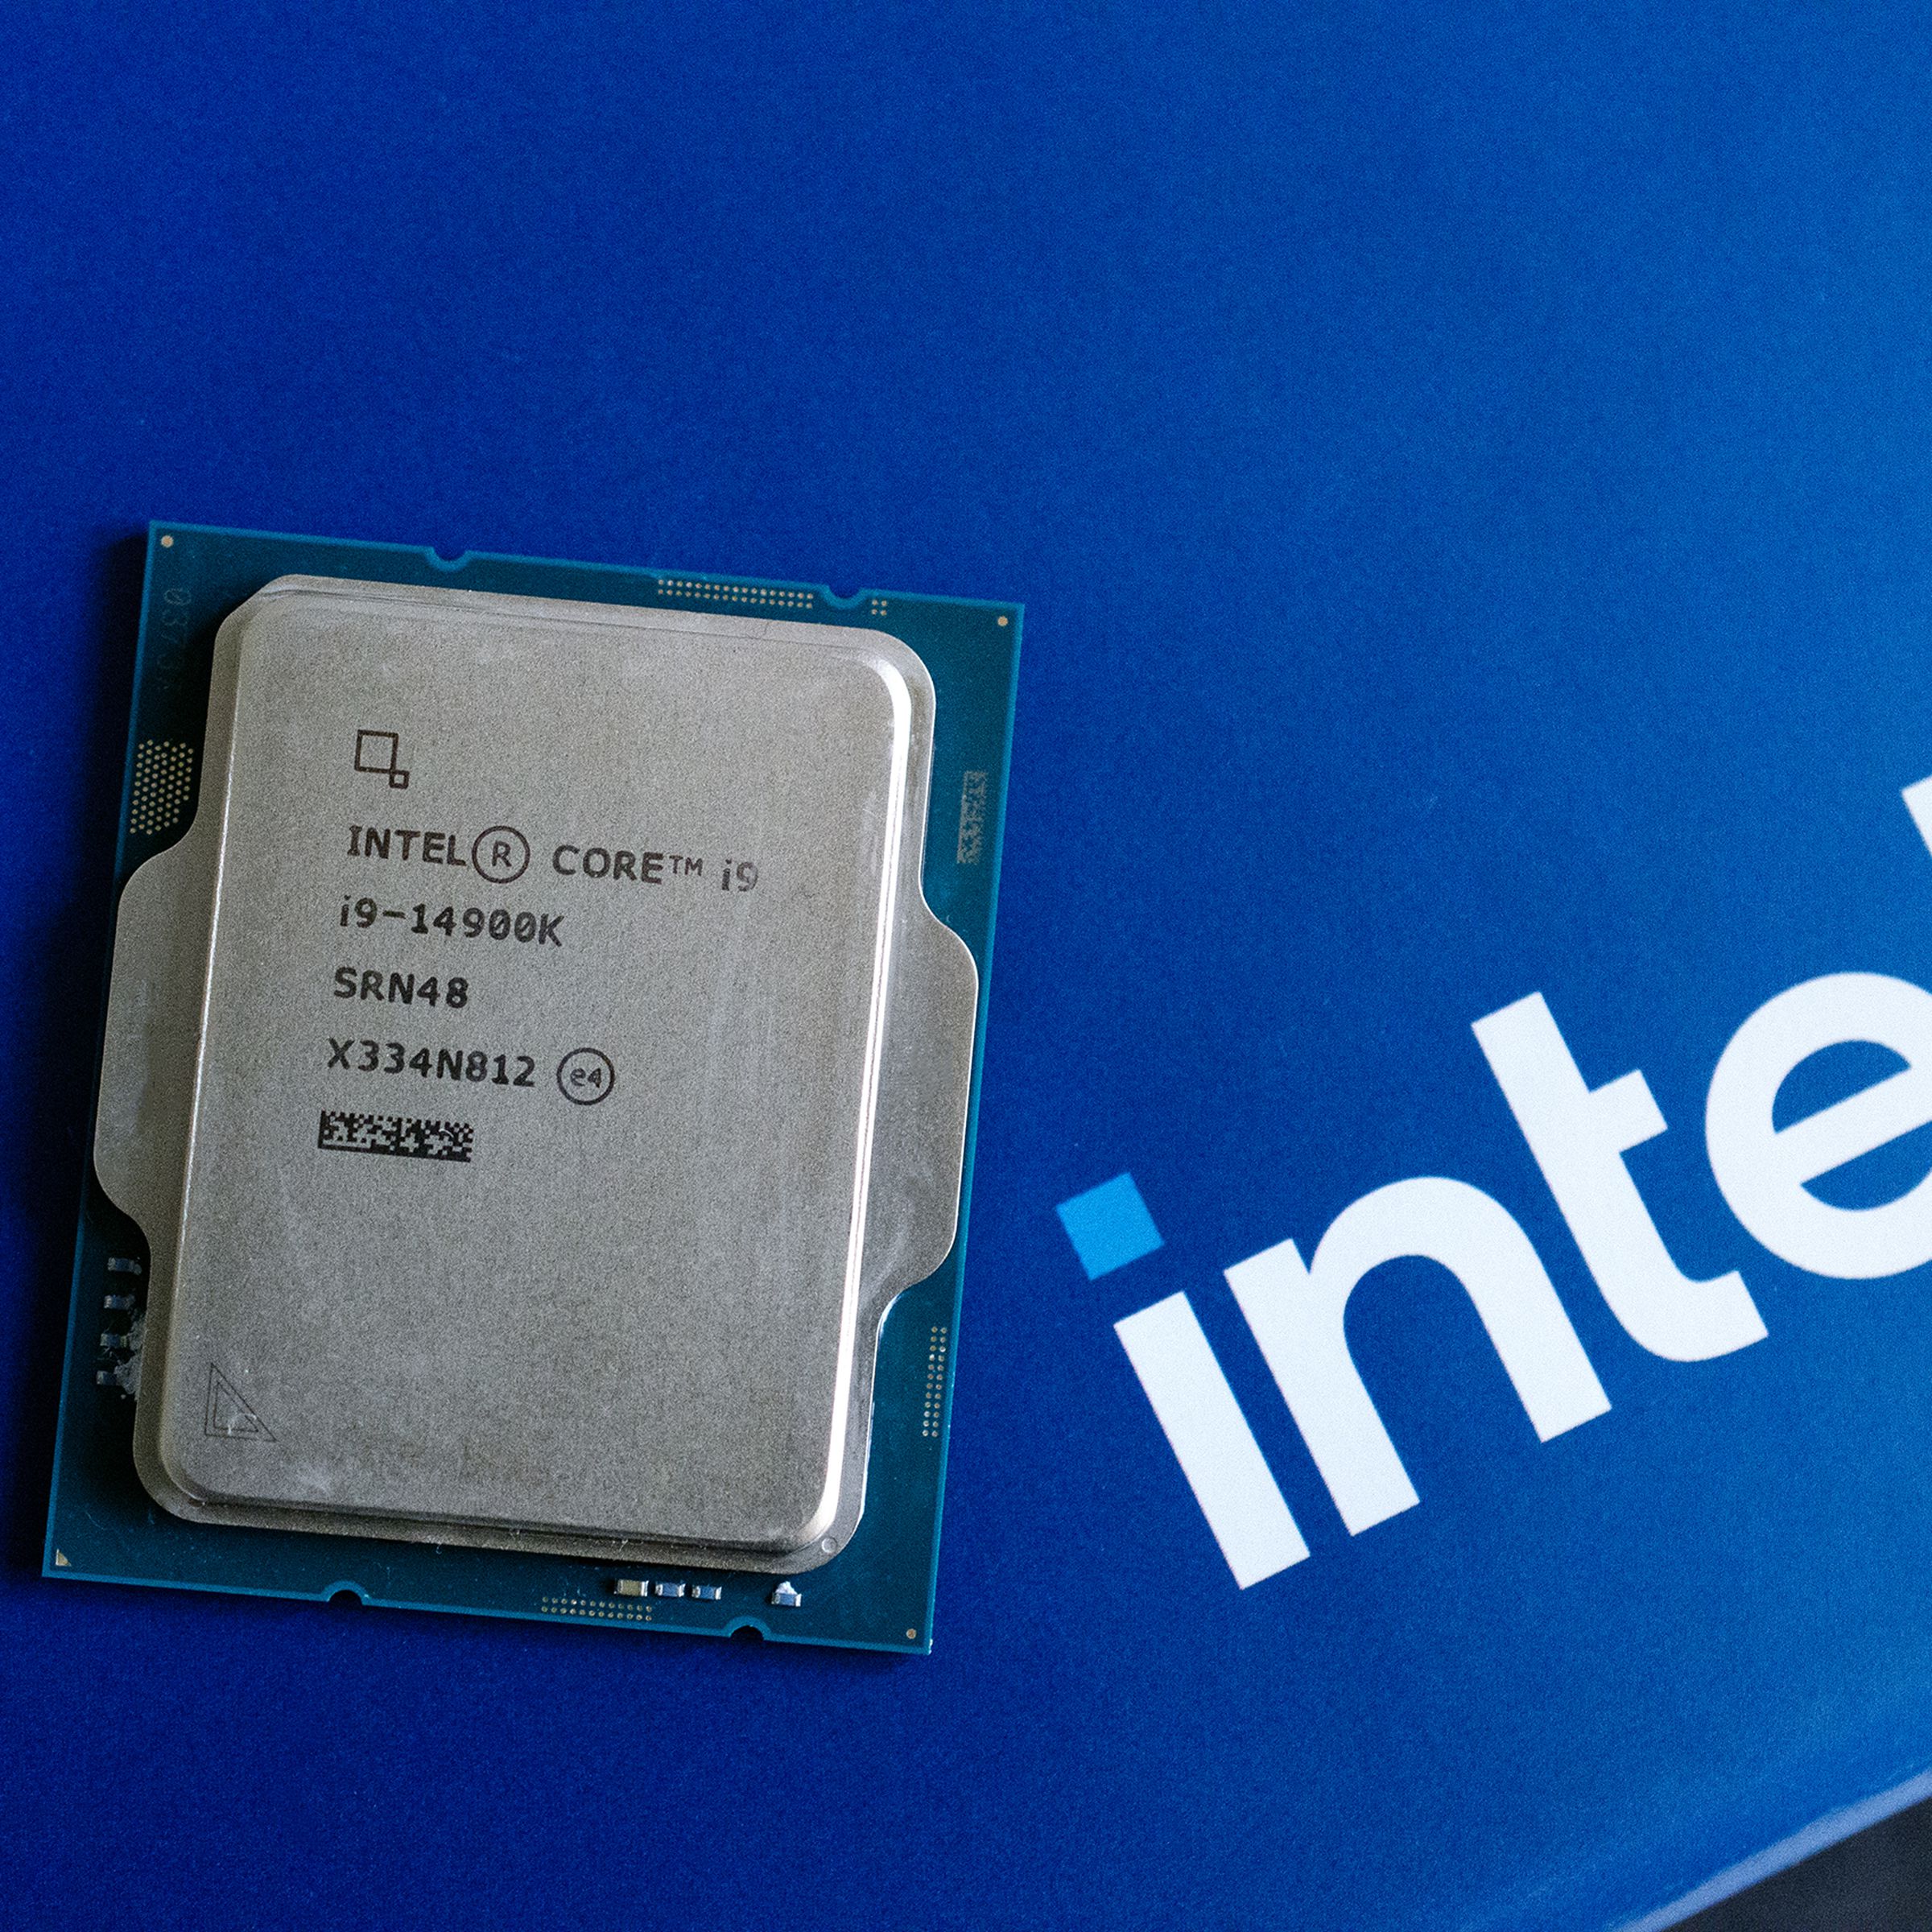 Intel’s Core i9-14900K sitting on a blue Intel box